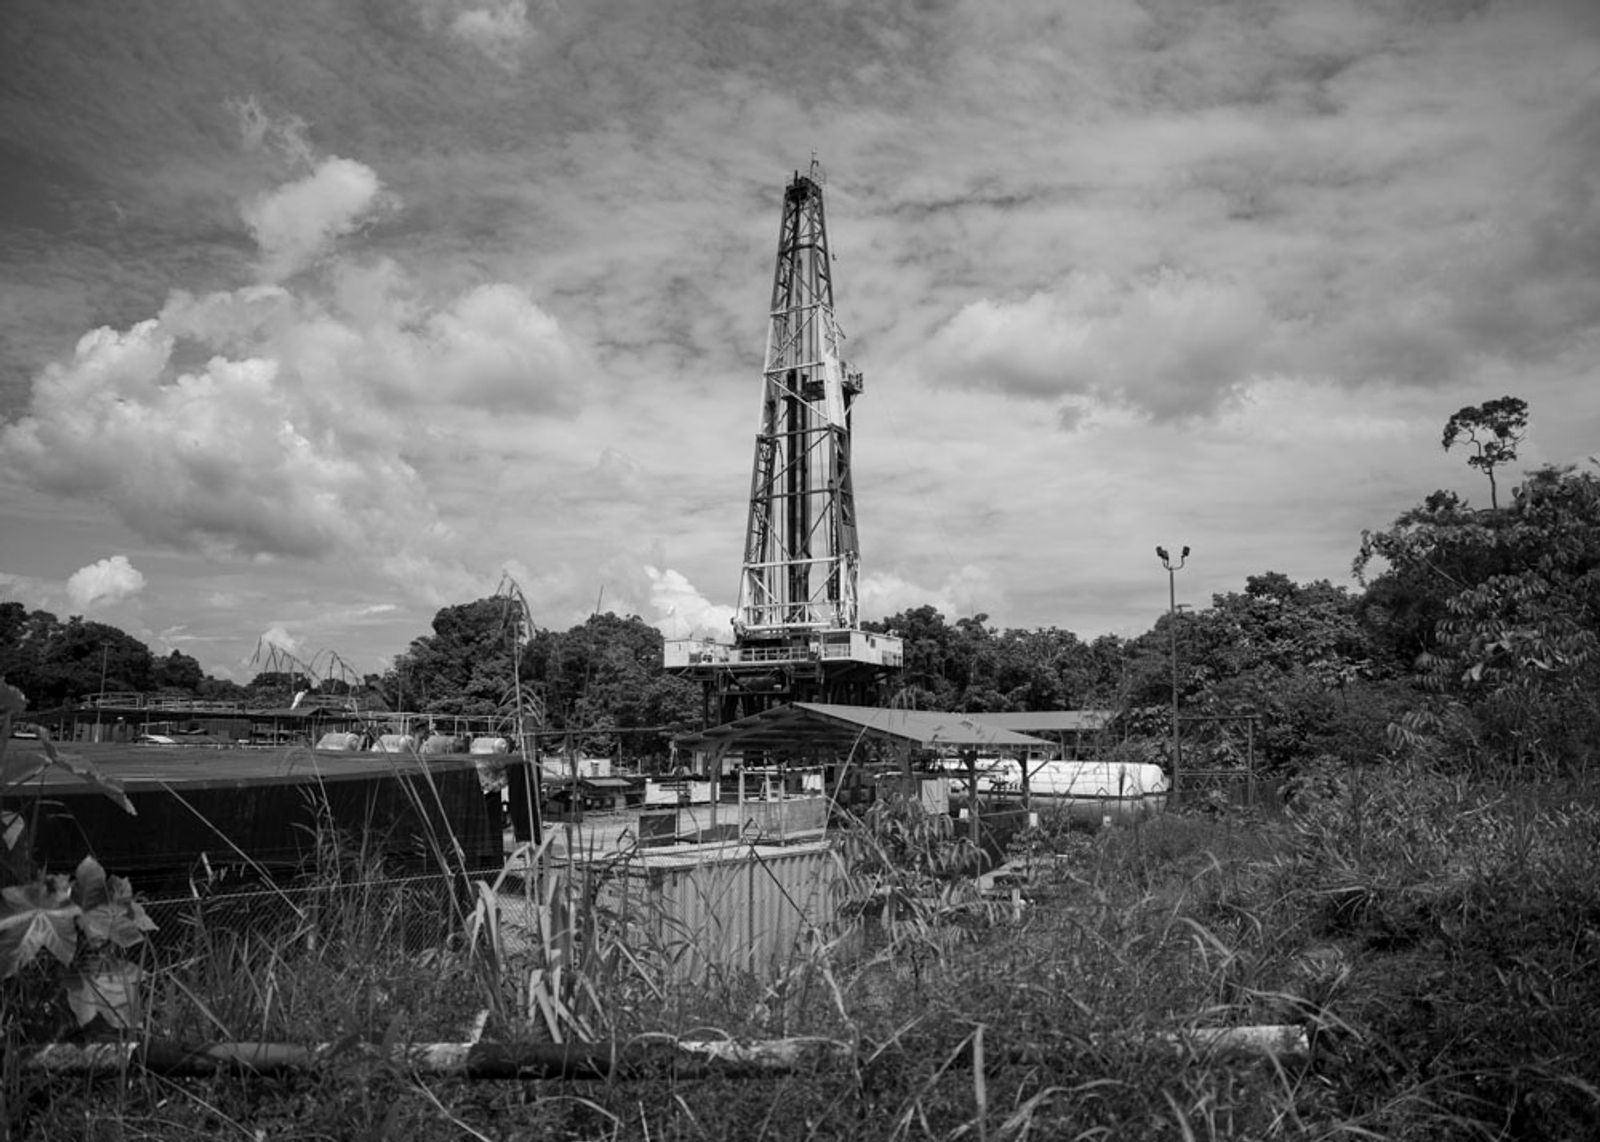 © Daniela Beltran B. - Oil extraction plant in the Ecuadorian Amazon, in Waorani territory.